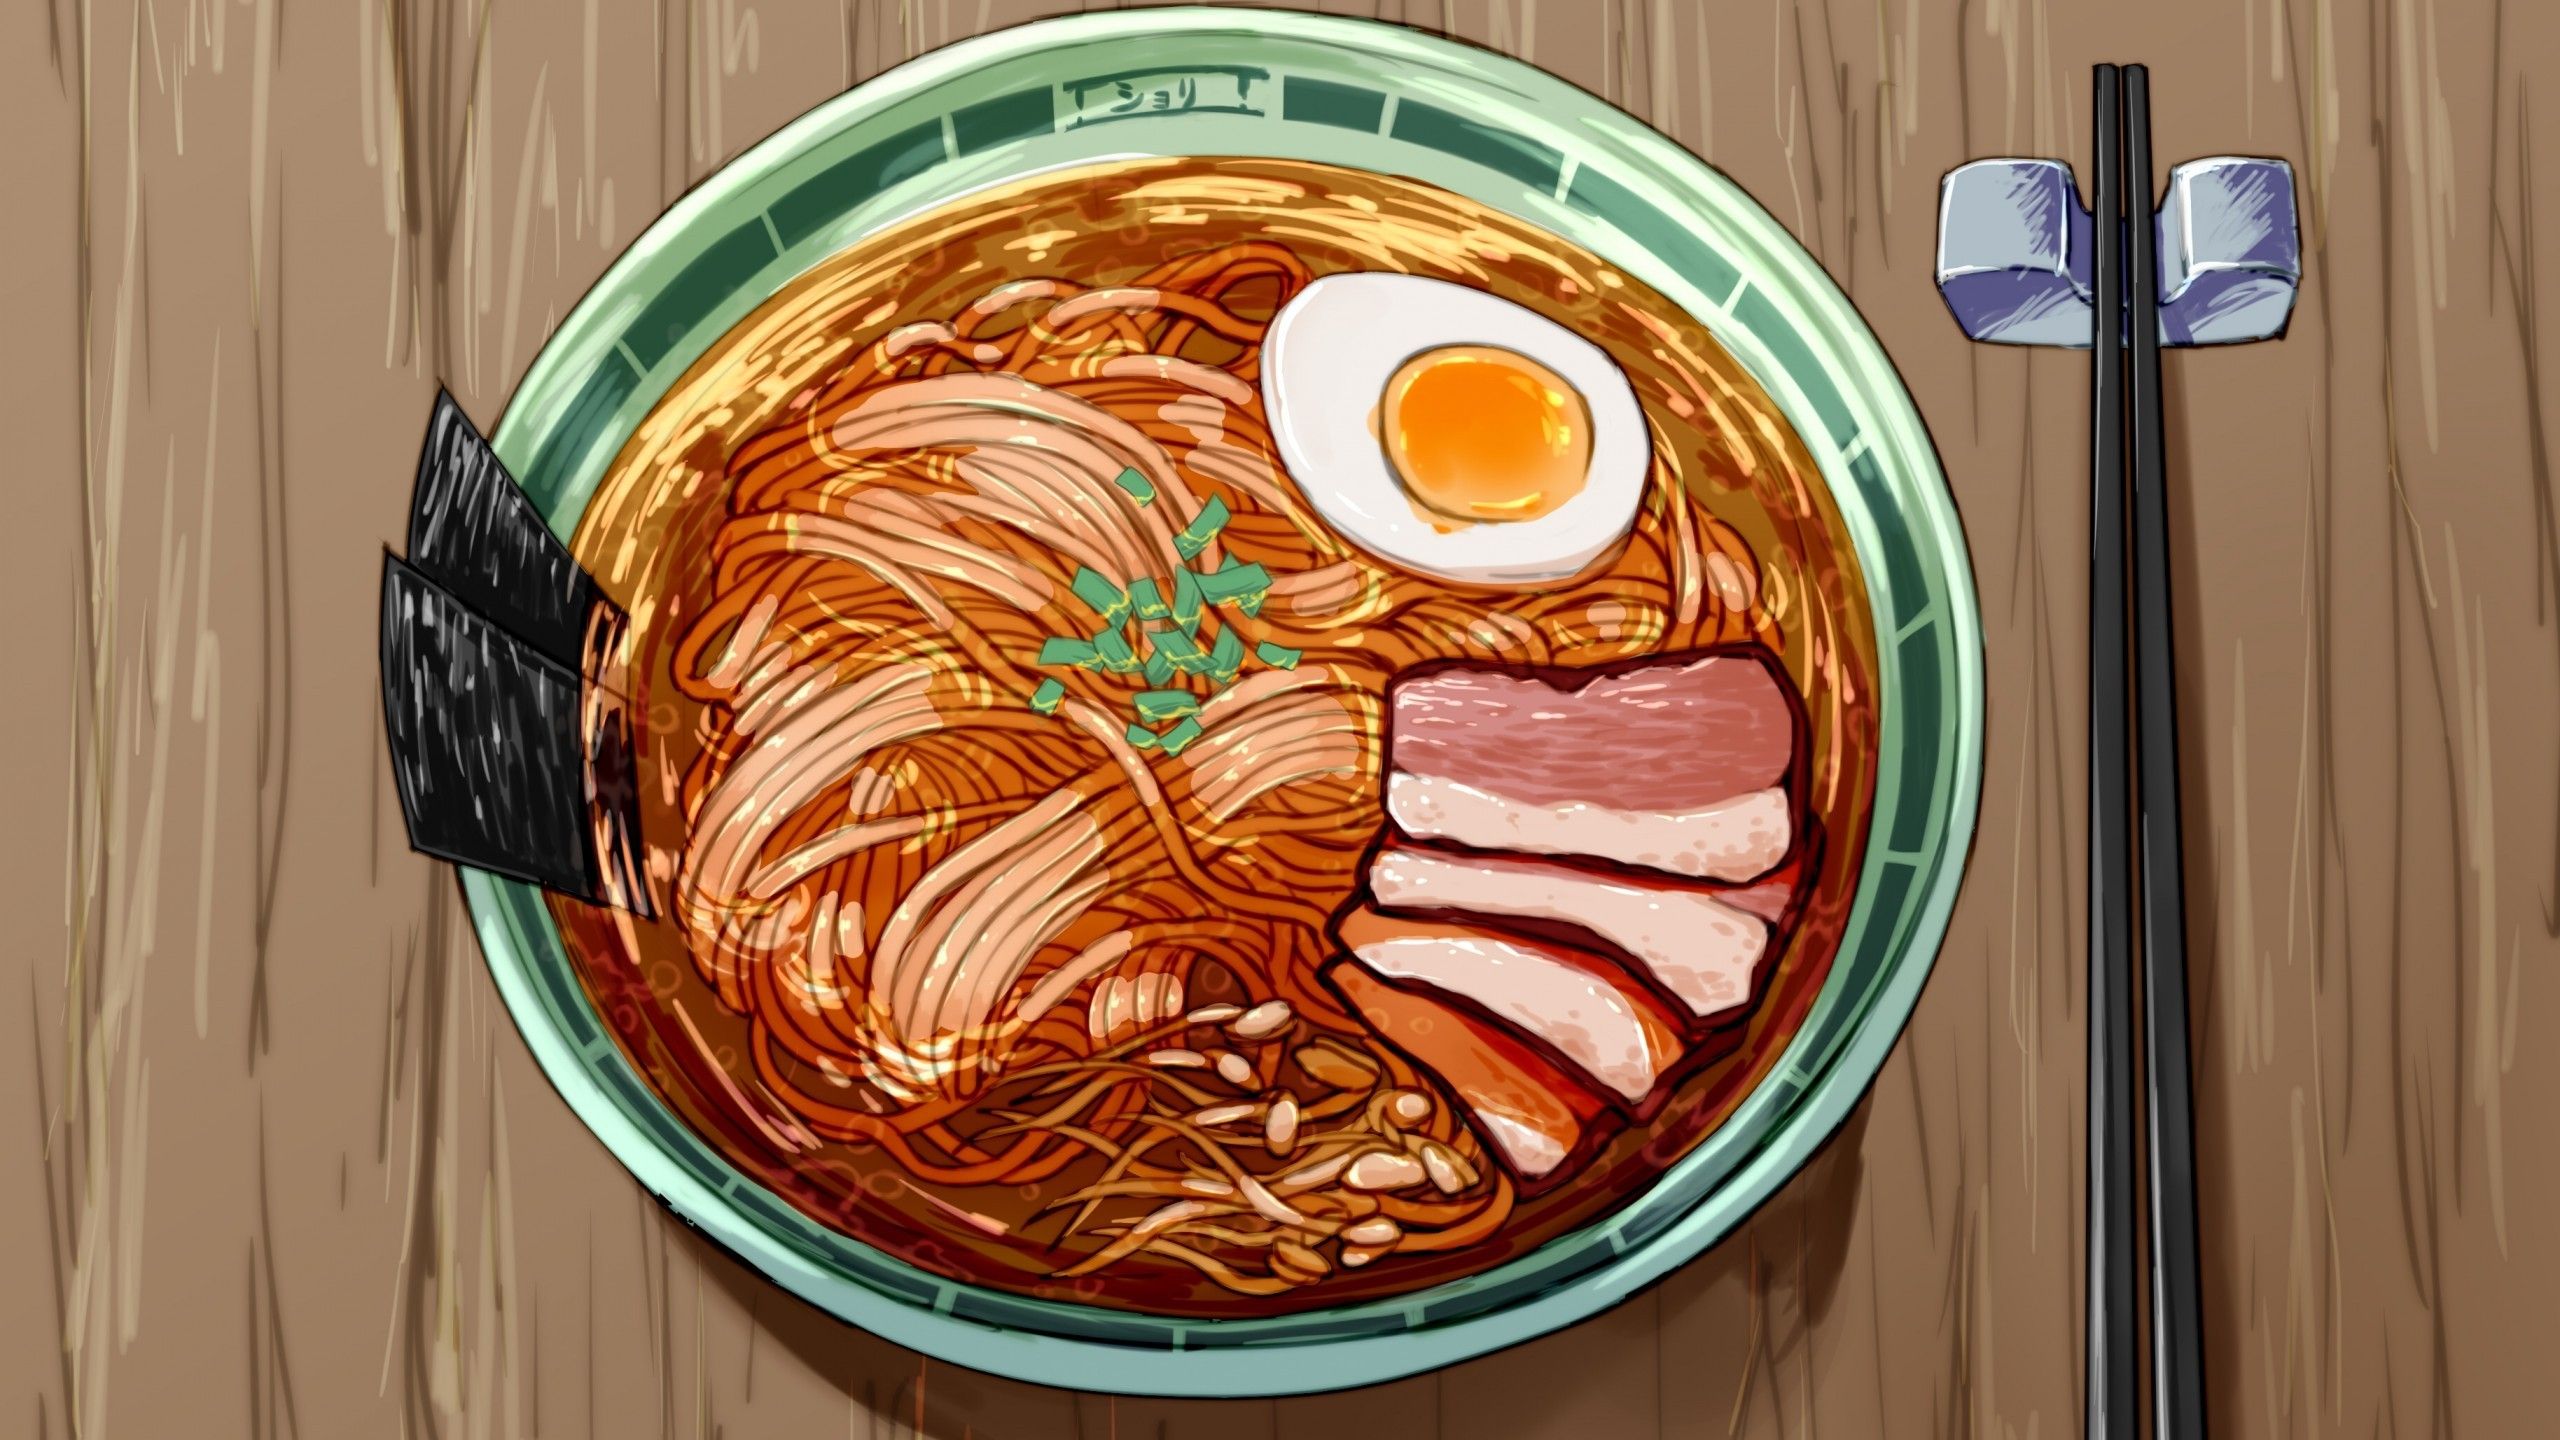 Download 2560x1440 Anime Ramen, Delicious, Chopsticks, Egg, Meat Wallpaper for iMac 27 inch